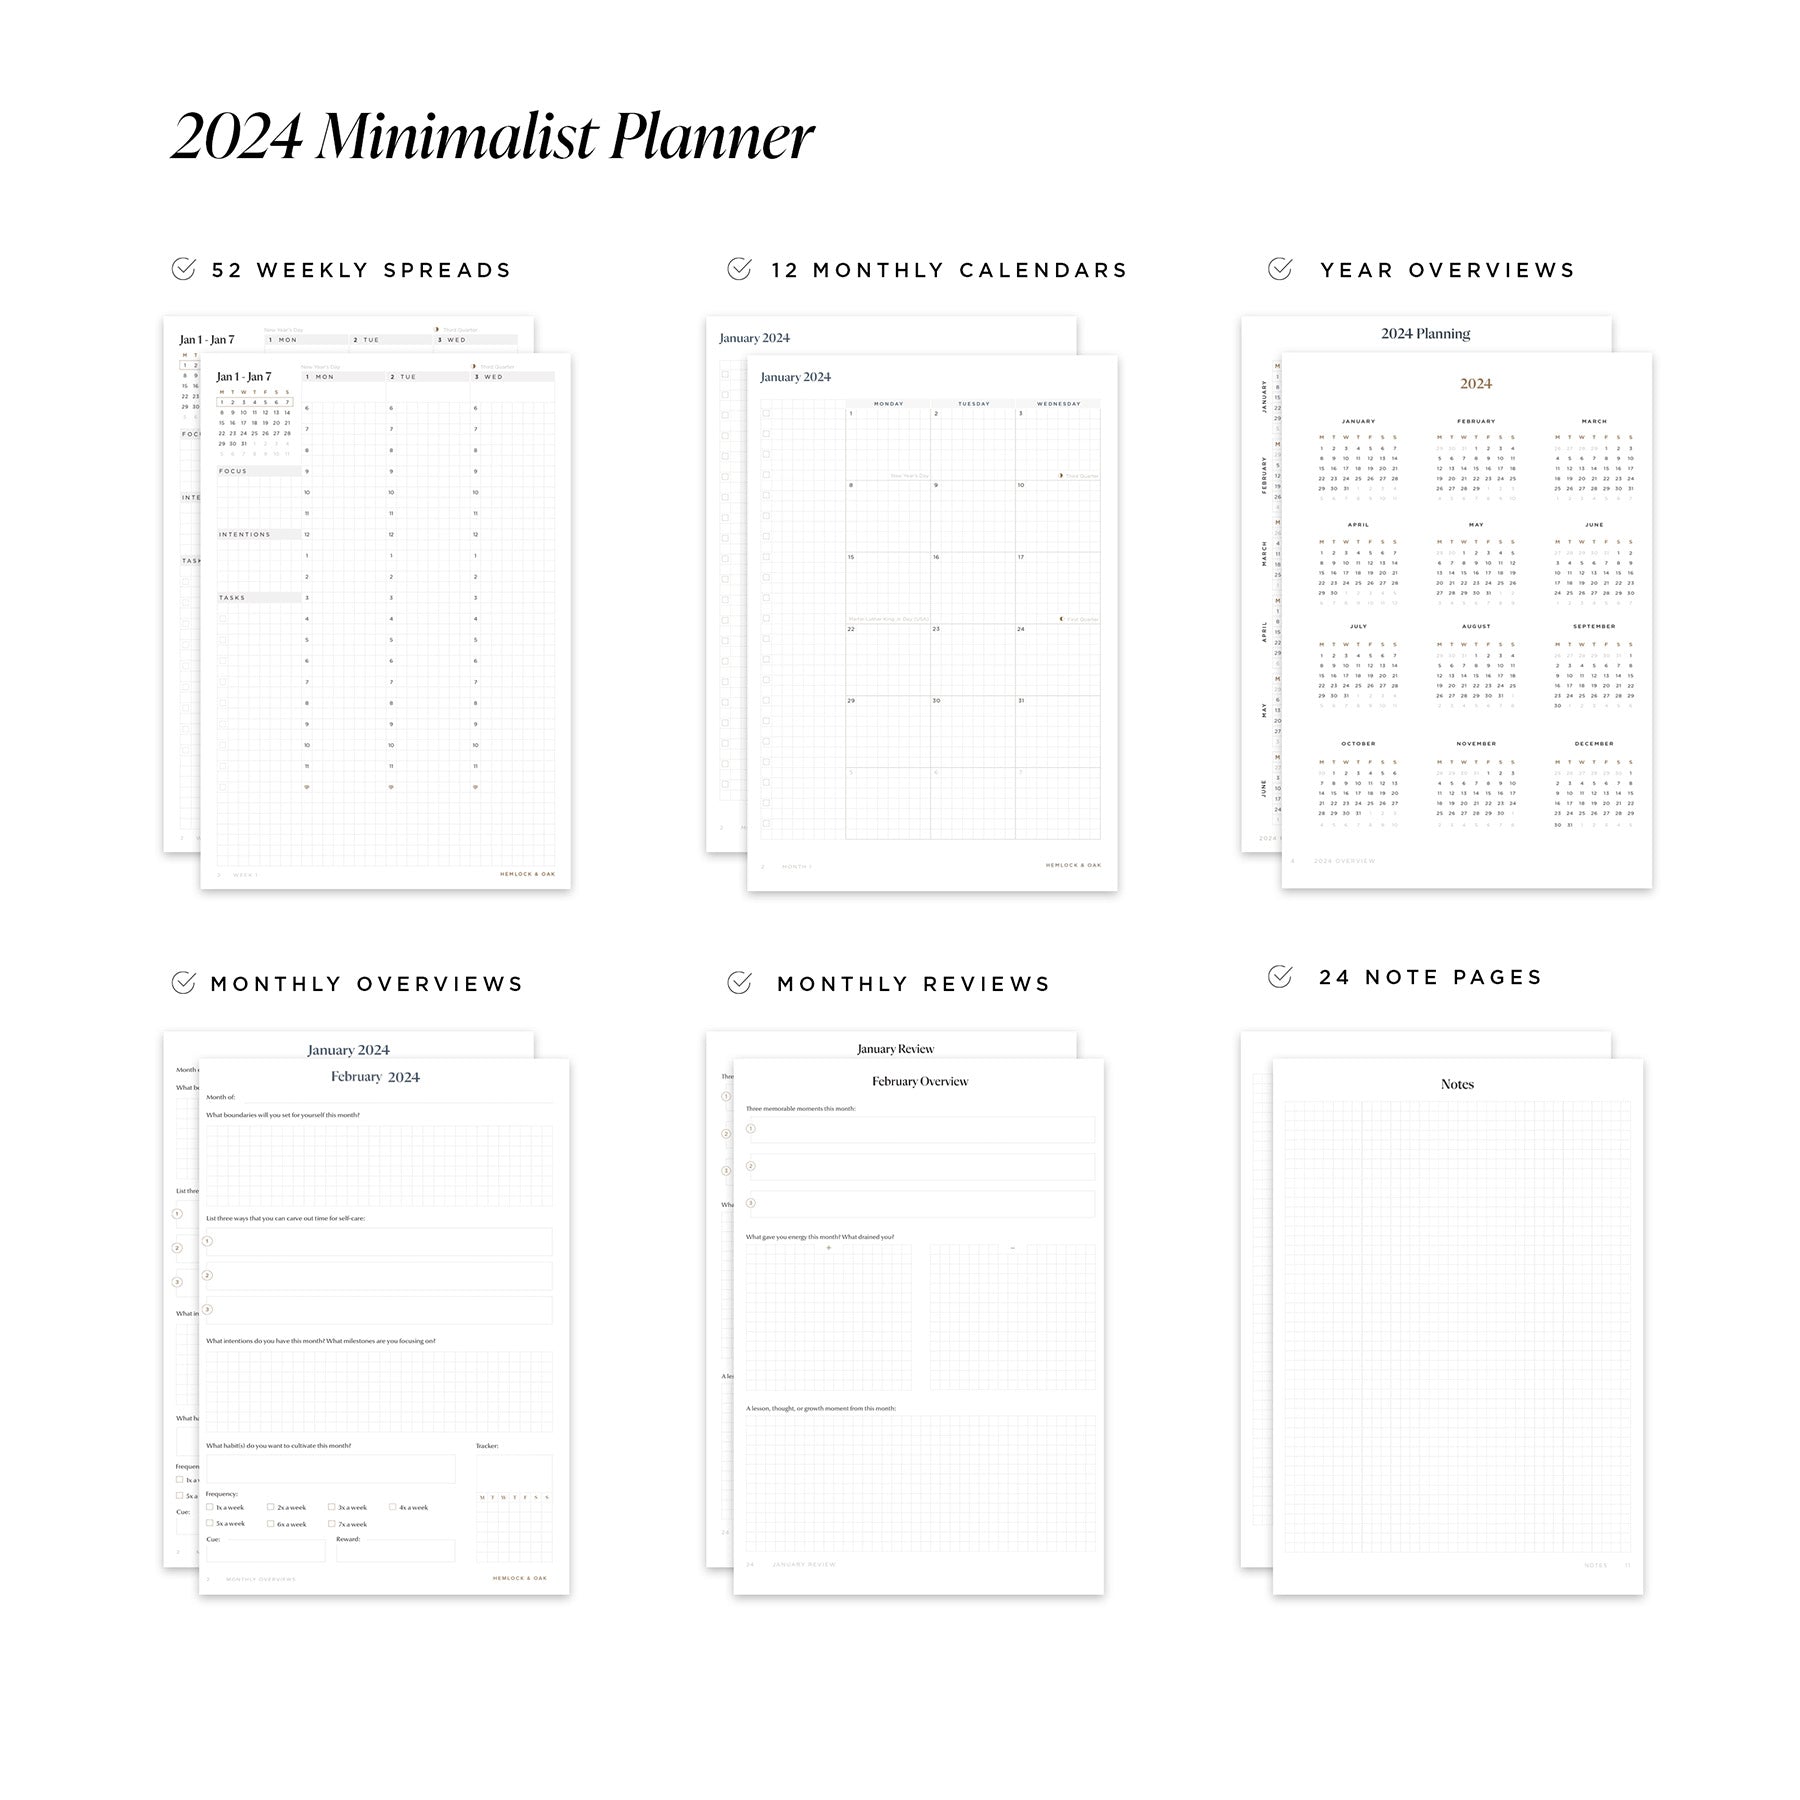 2024 Minimalist Planner (Imperfect)